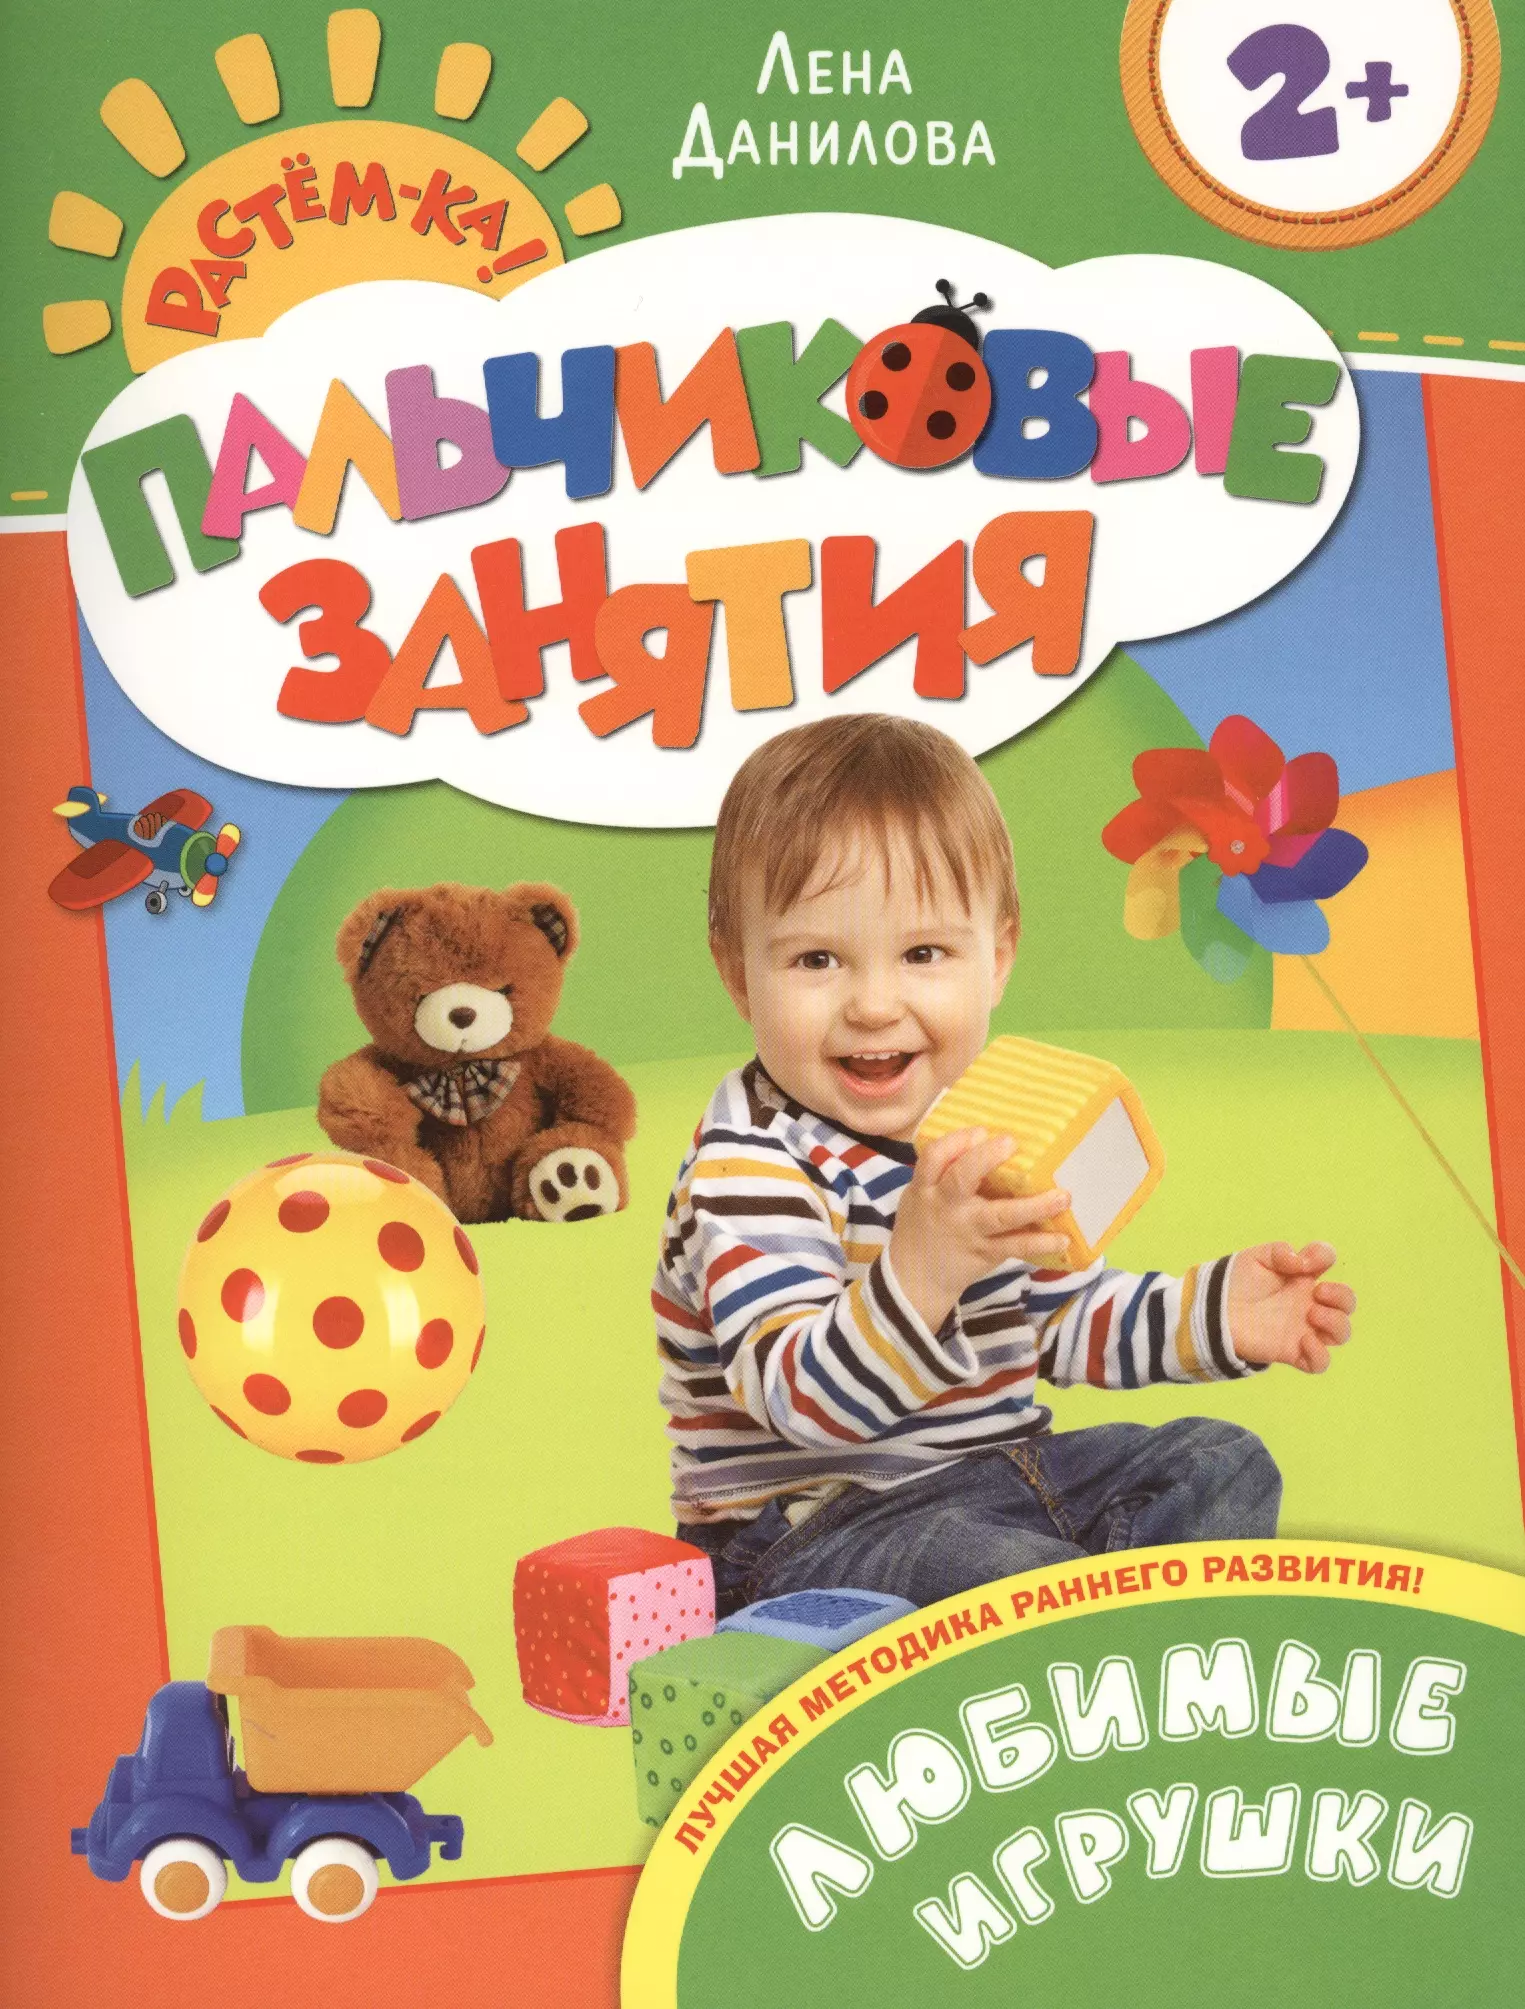 Данилова Елена Александровна, Данилова Лена - Любимые игрушки 2+